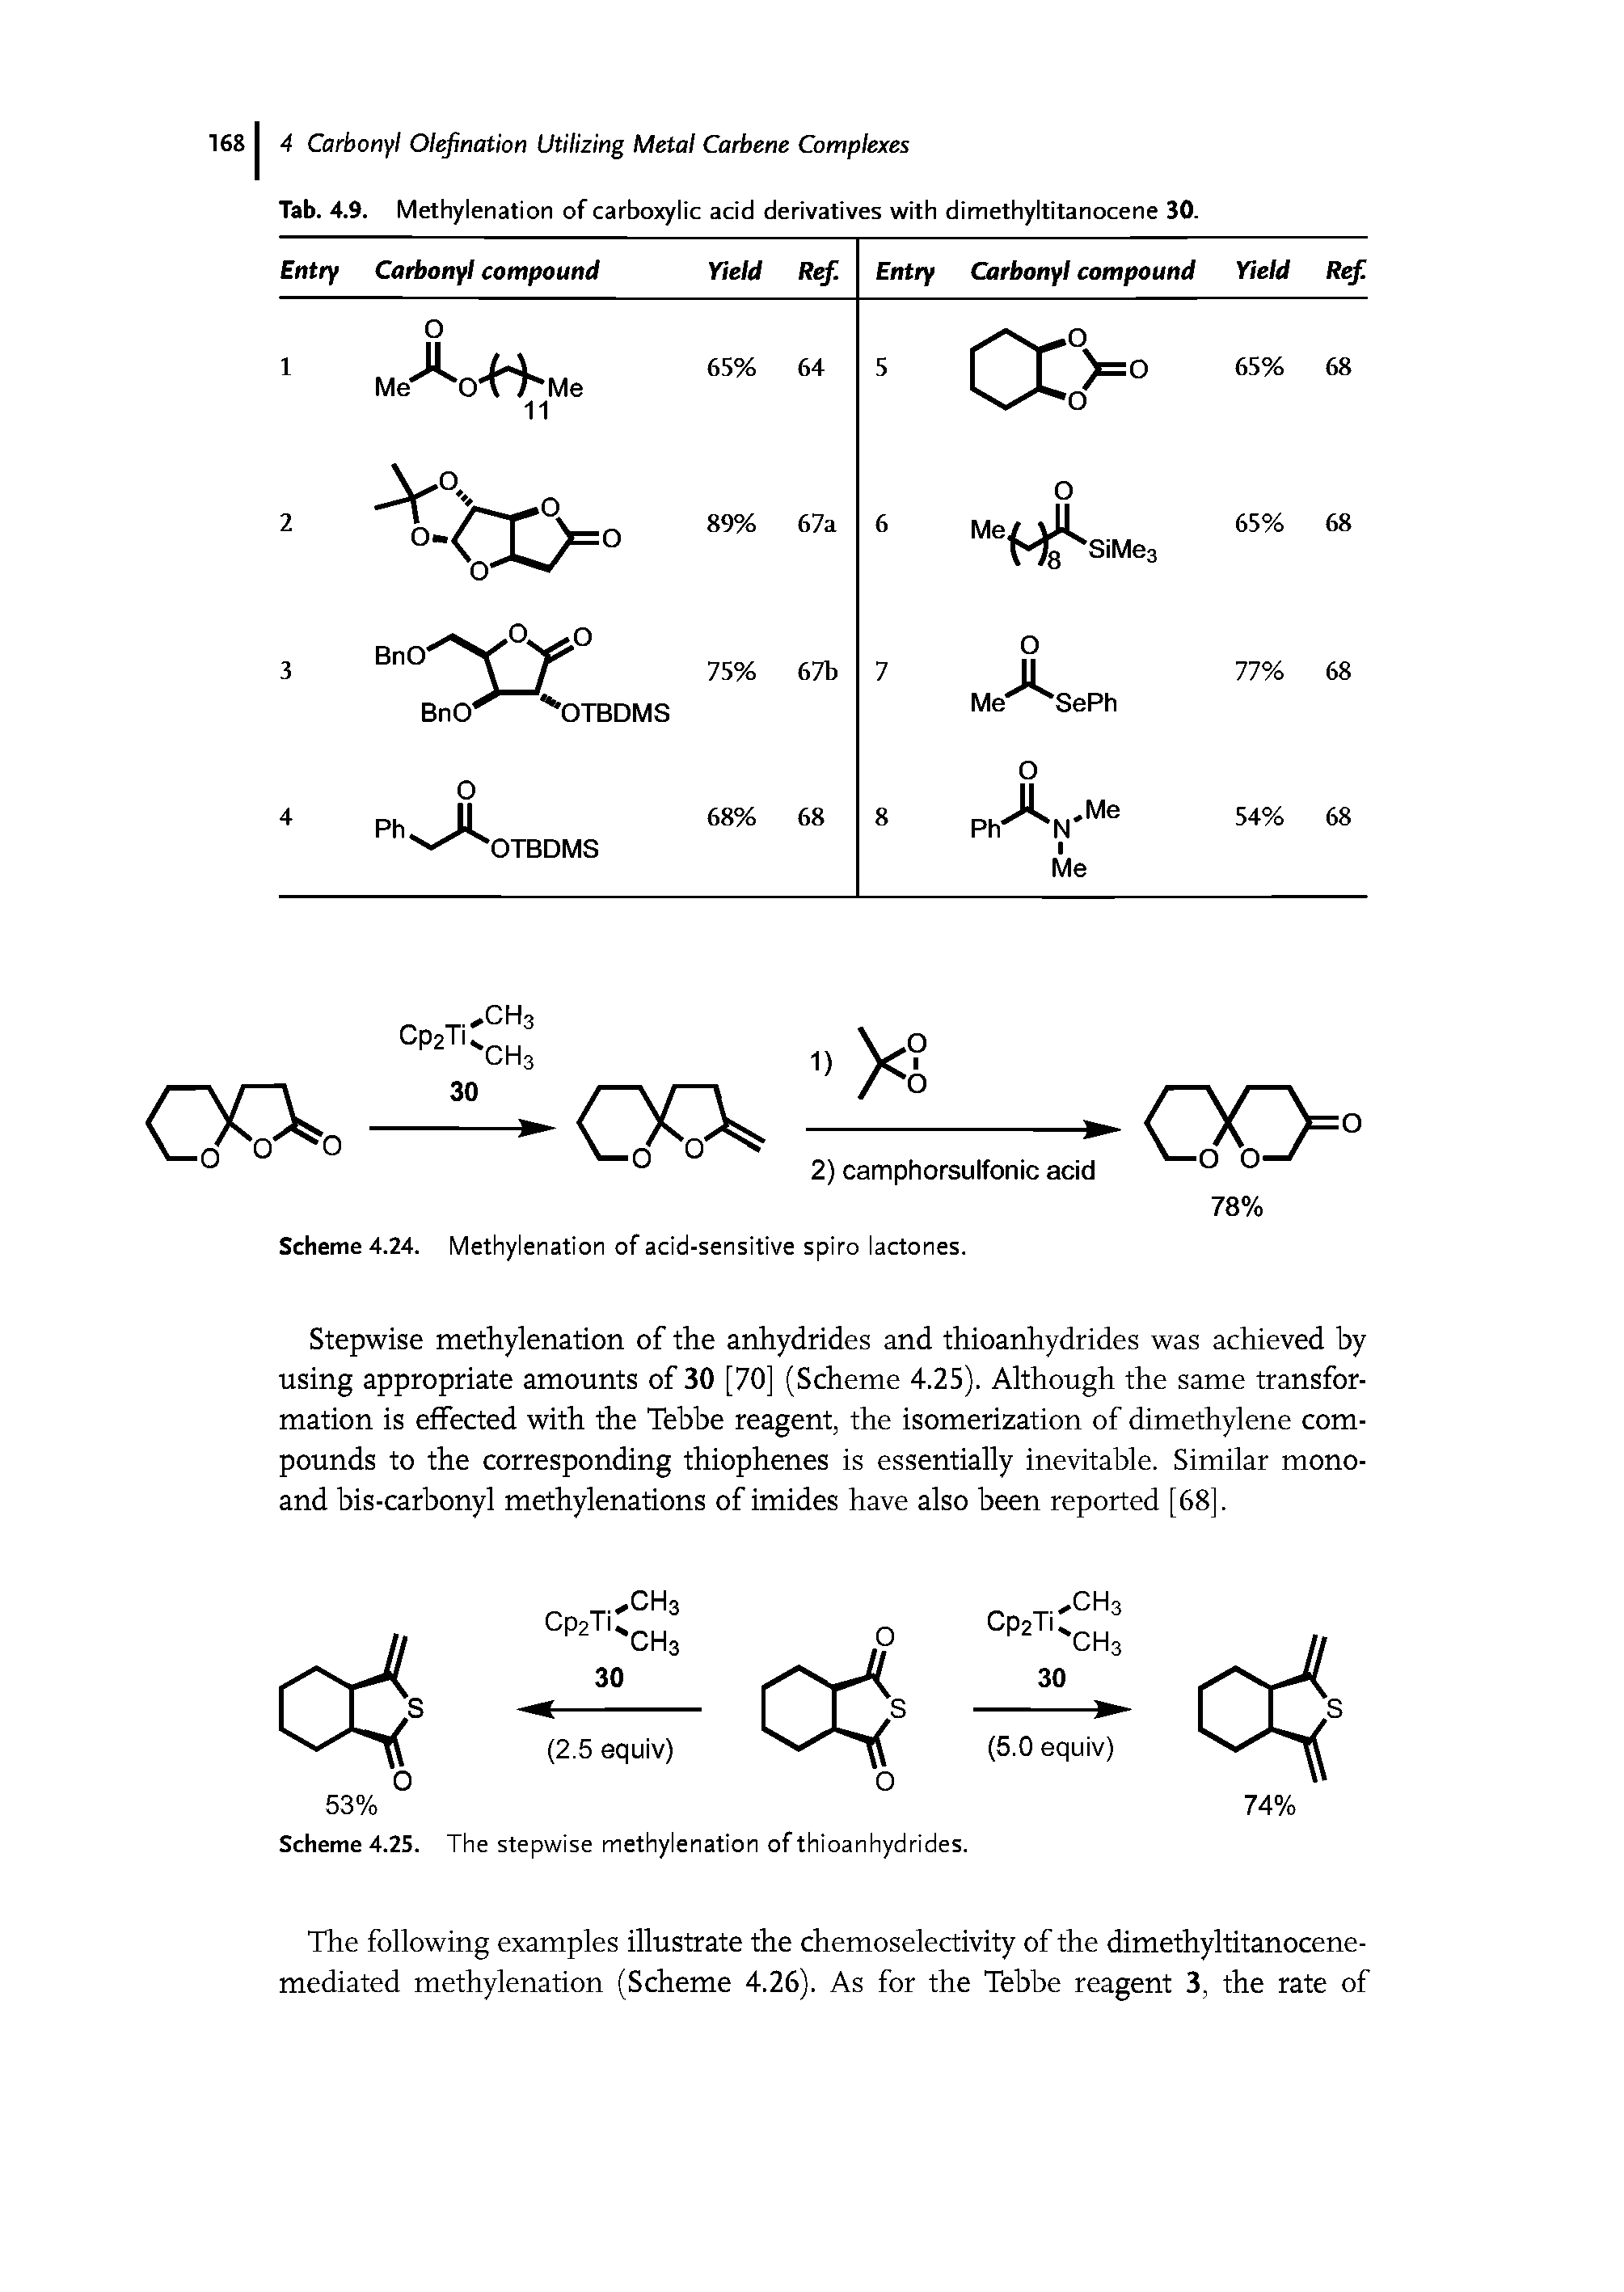 Tab. 4.9. Methylenation of carboxylic acid derivatives with dimethyltitanocene 30.